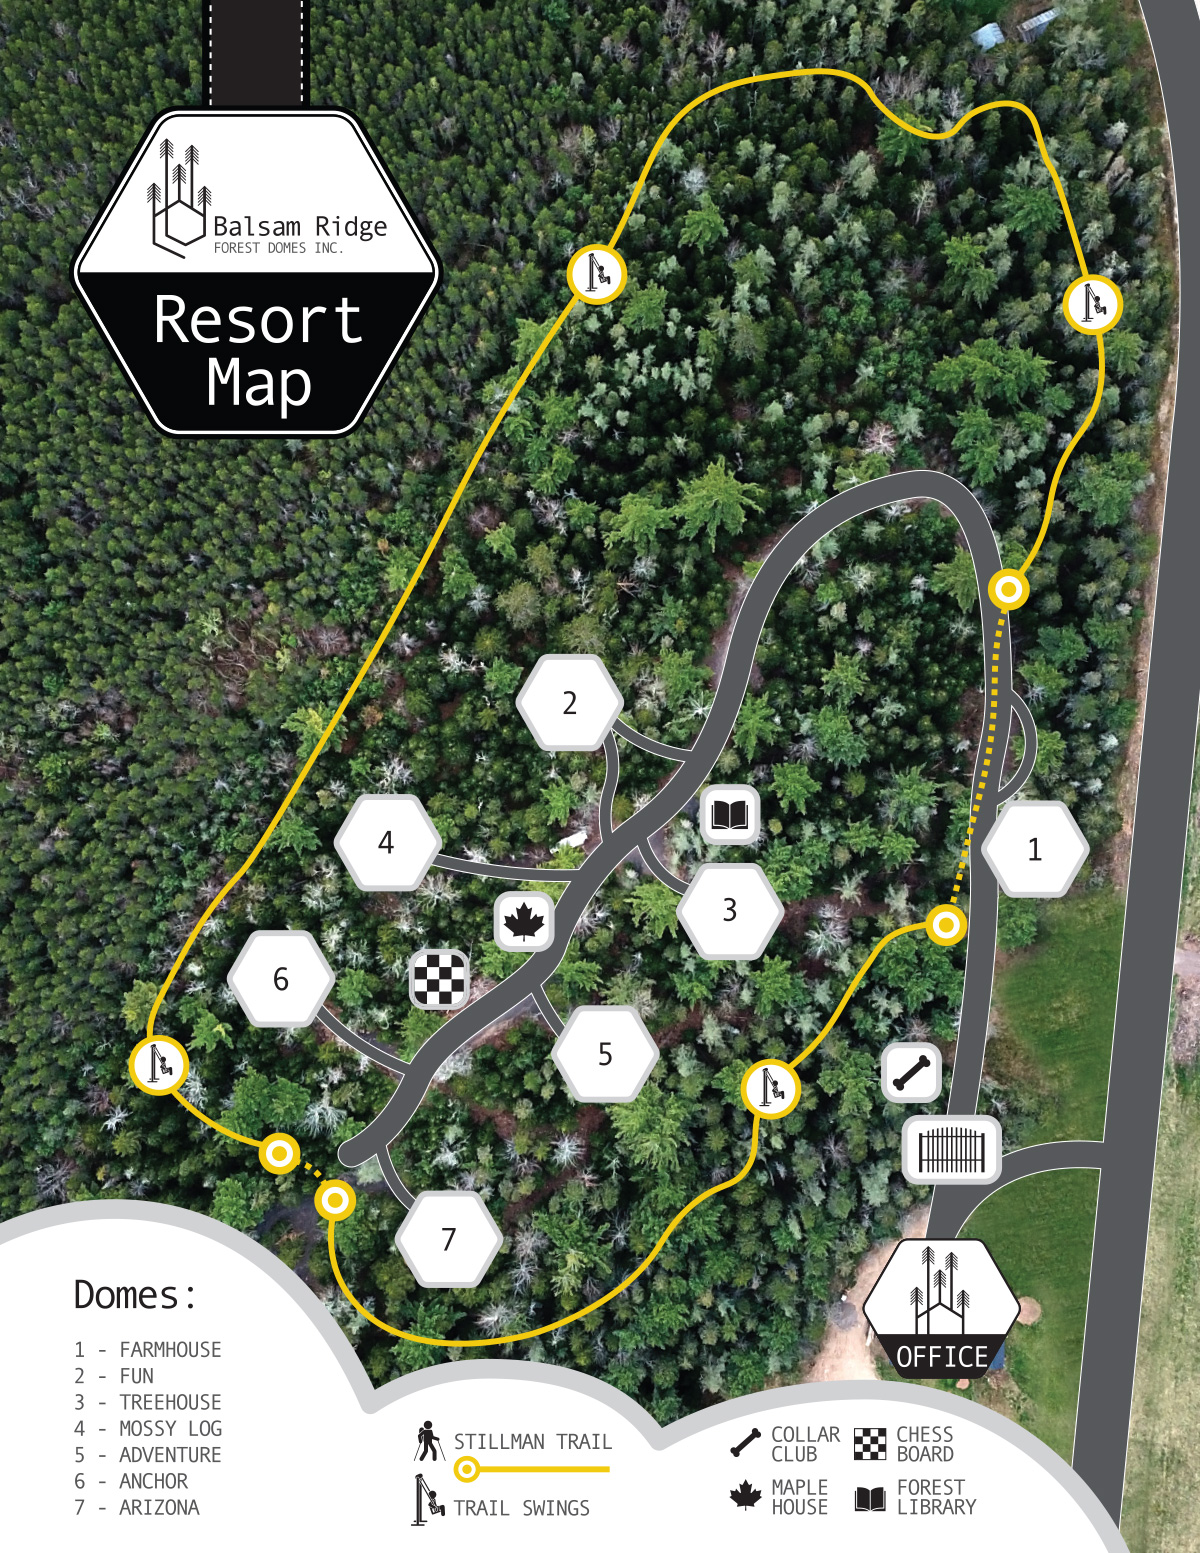 Balsam Ridge Forest Domes Inc. Resort Map